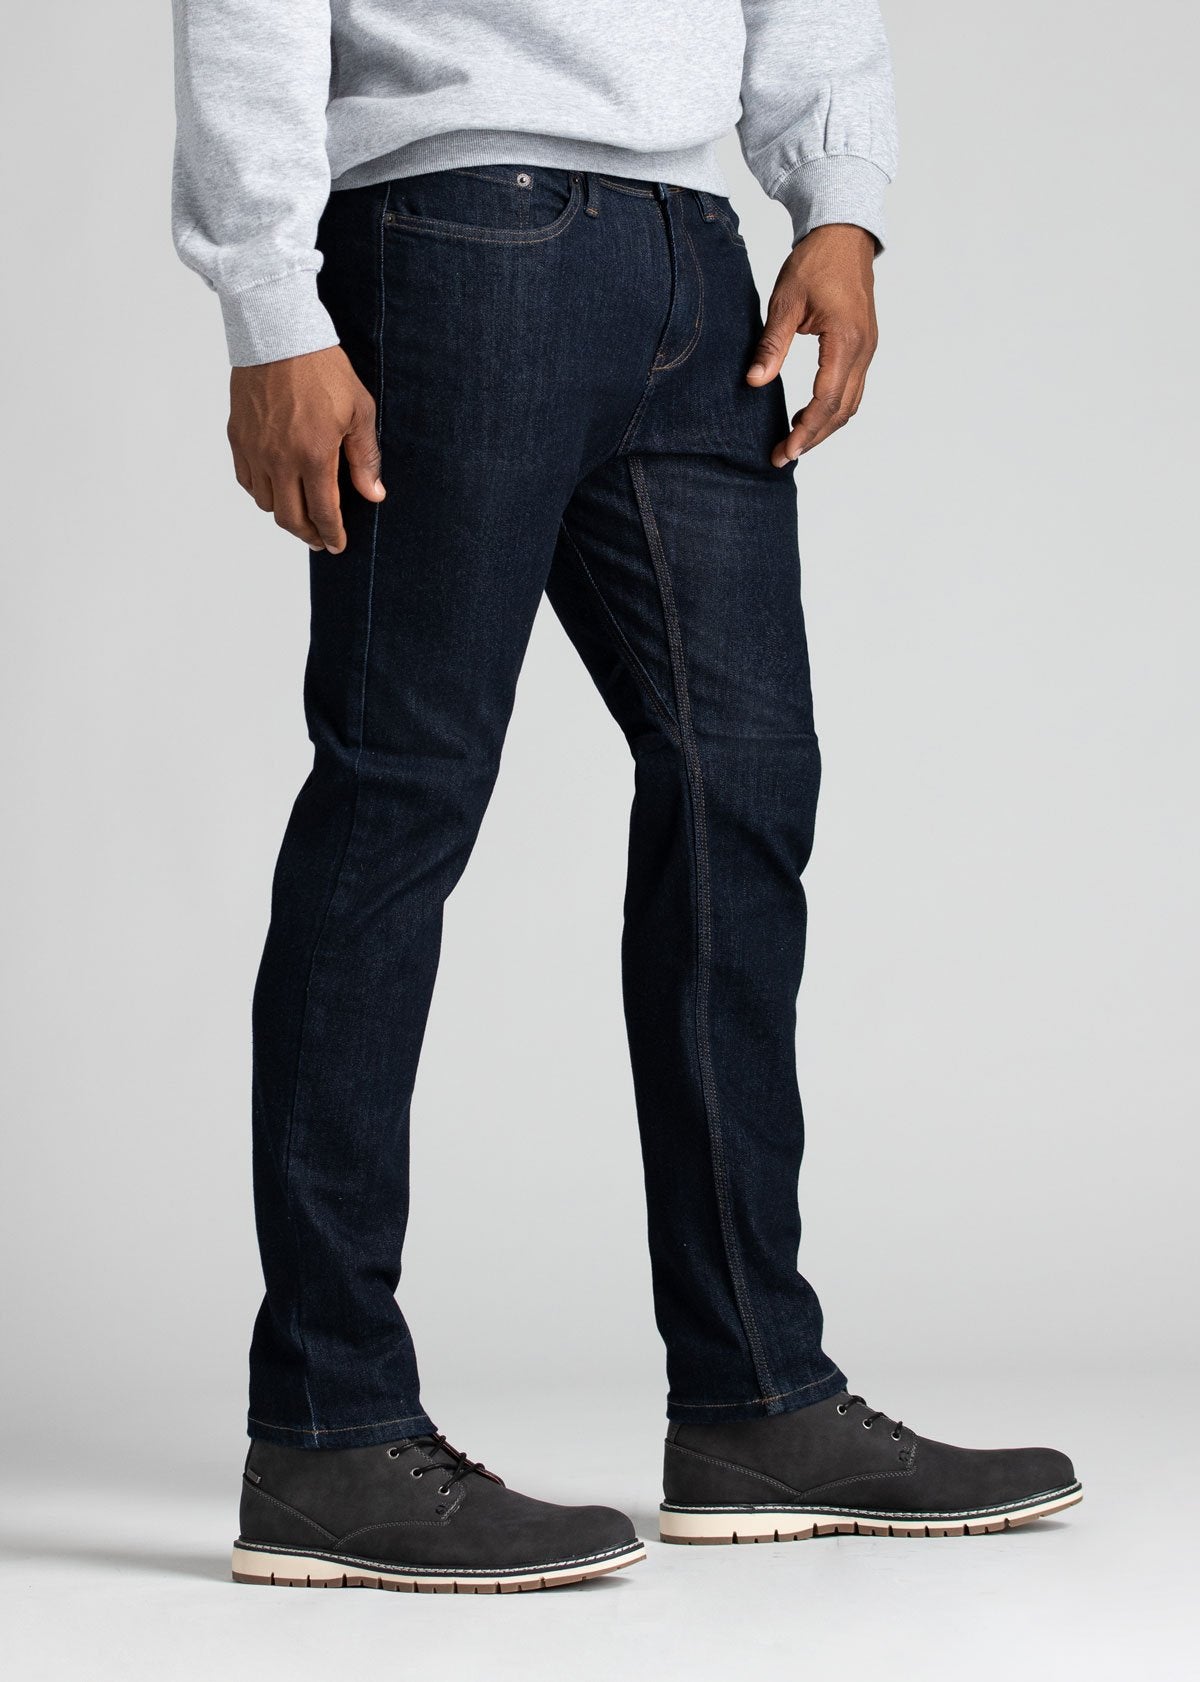 Mens slim fit blue water resistant stretch jeans side